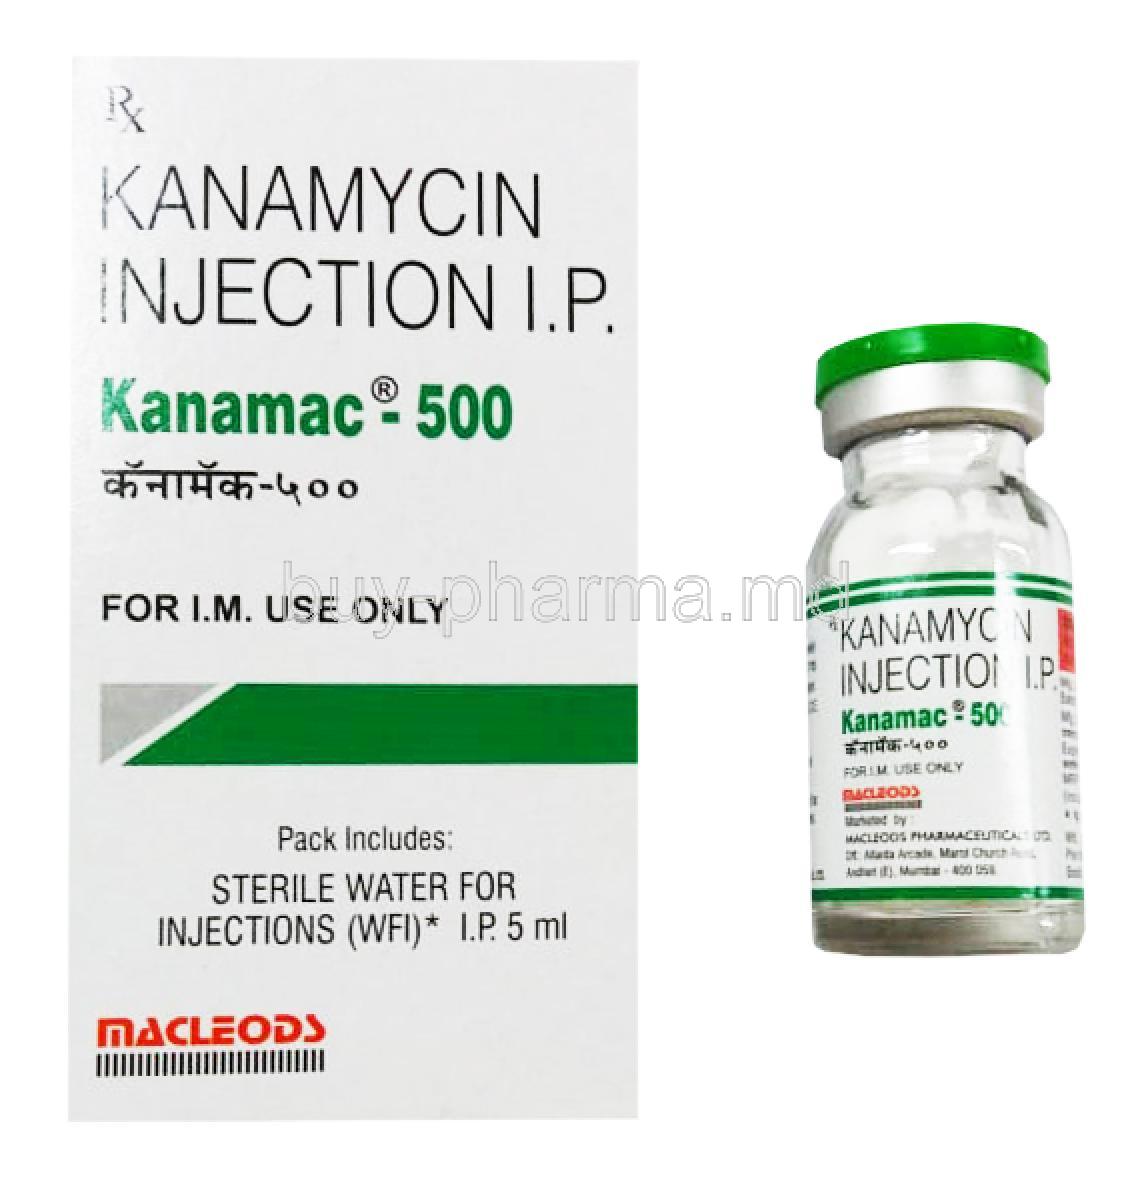 Kanamac-500, Kanamycin Injection I.P. , 500mg 5ml, Macleods, box and vial presentation